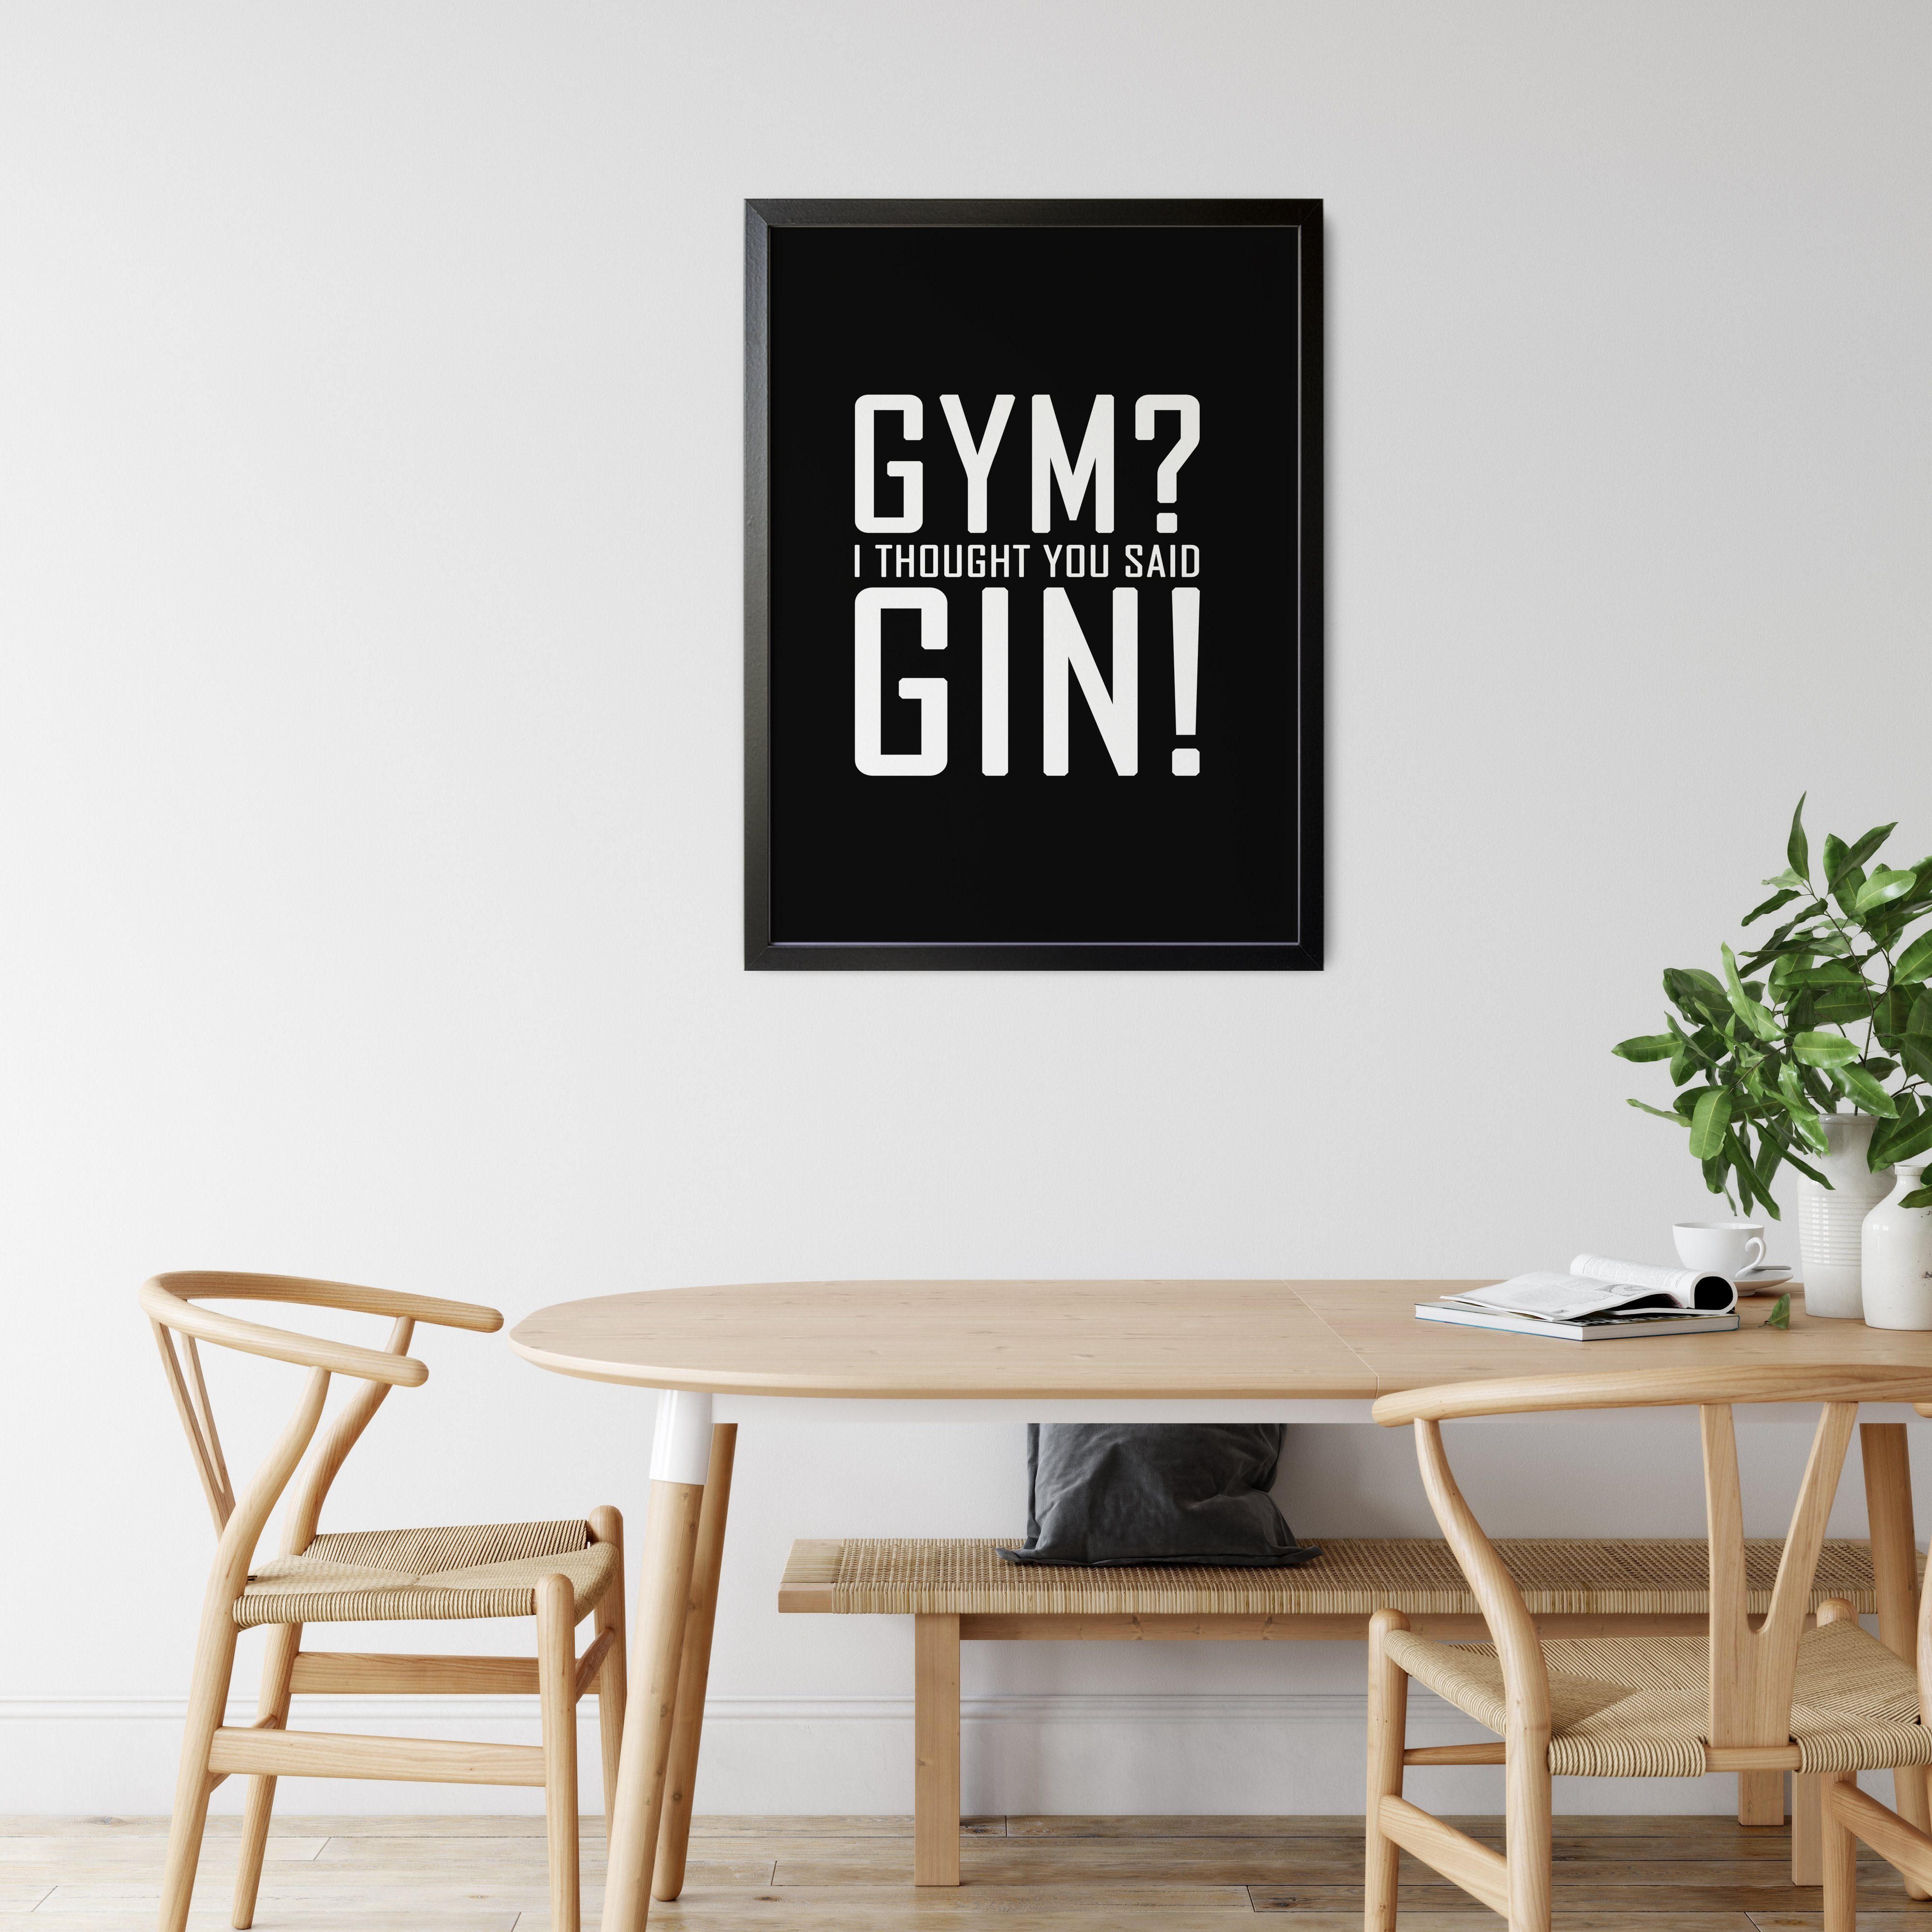 Poster Liebhaber Gym? you Poster, said Geschenk für Gin!, I Typo thought Gin Gin Likarto